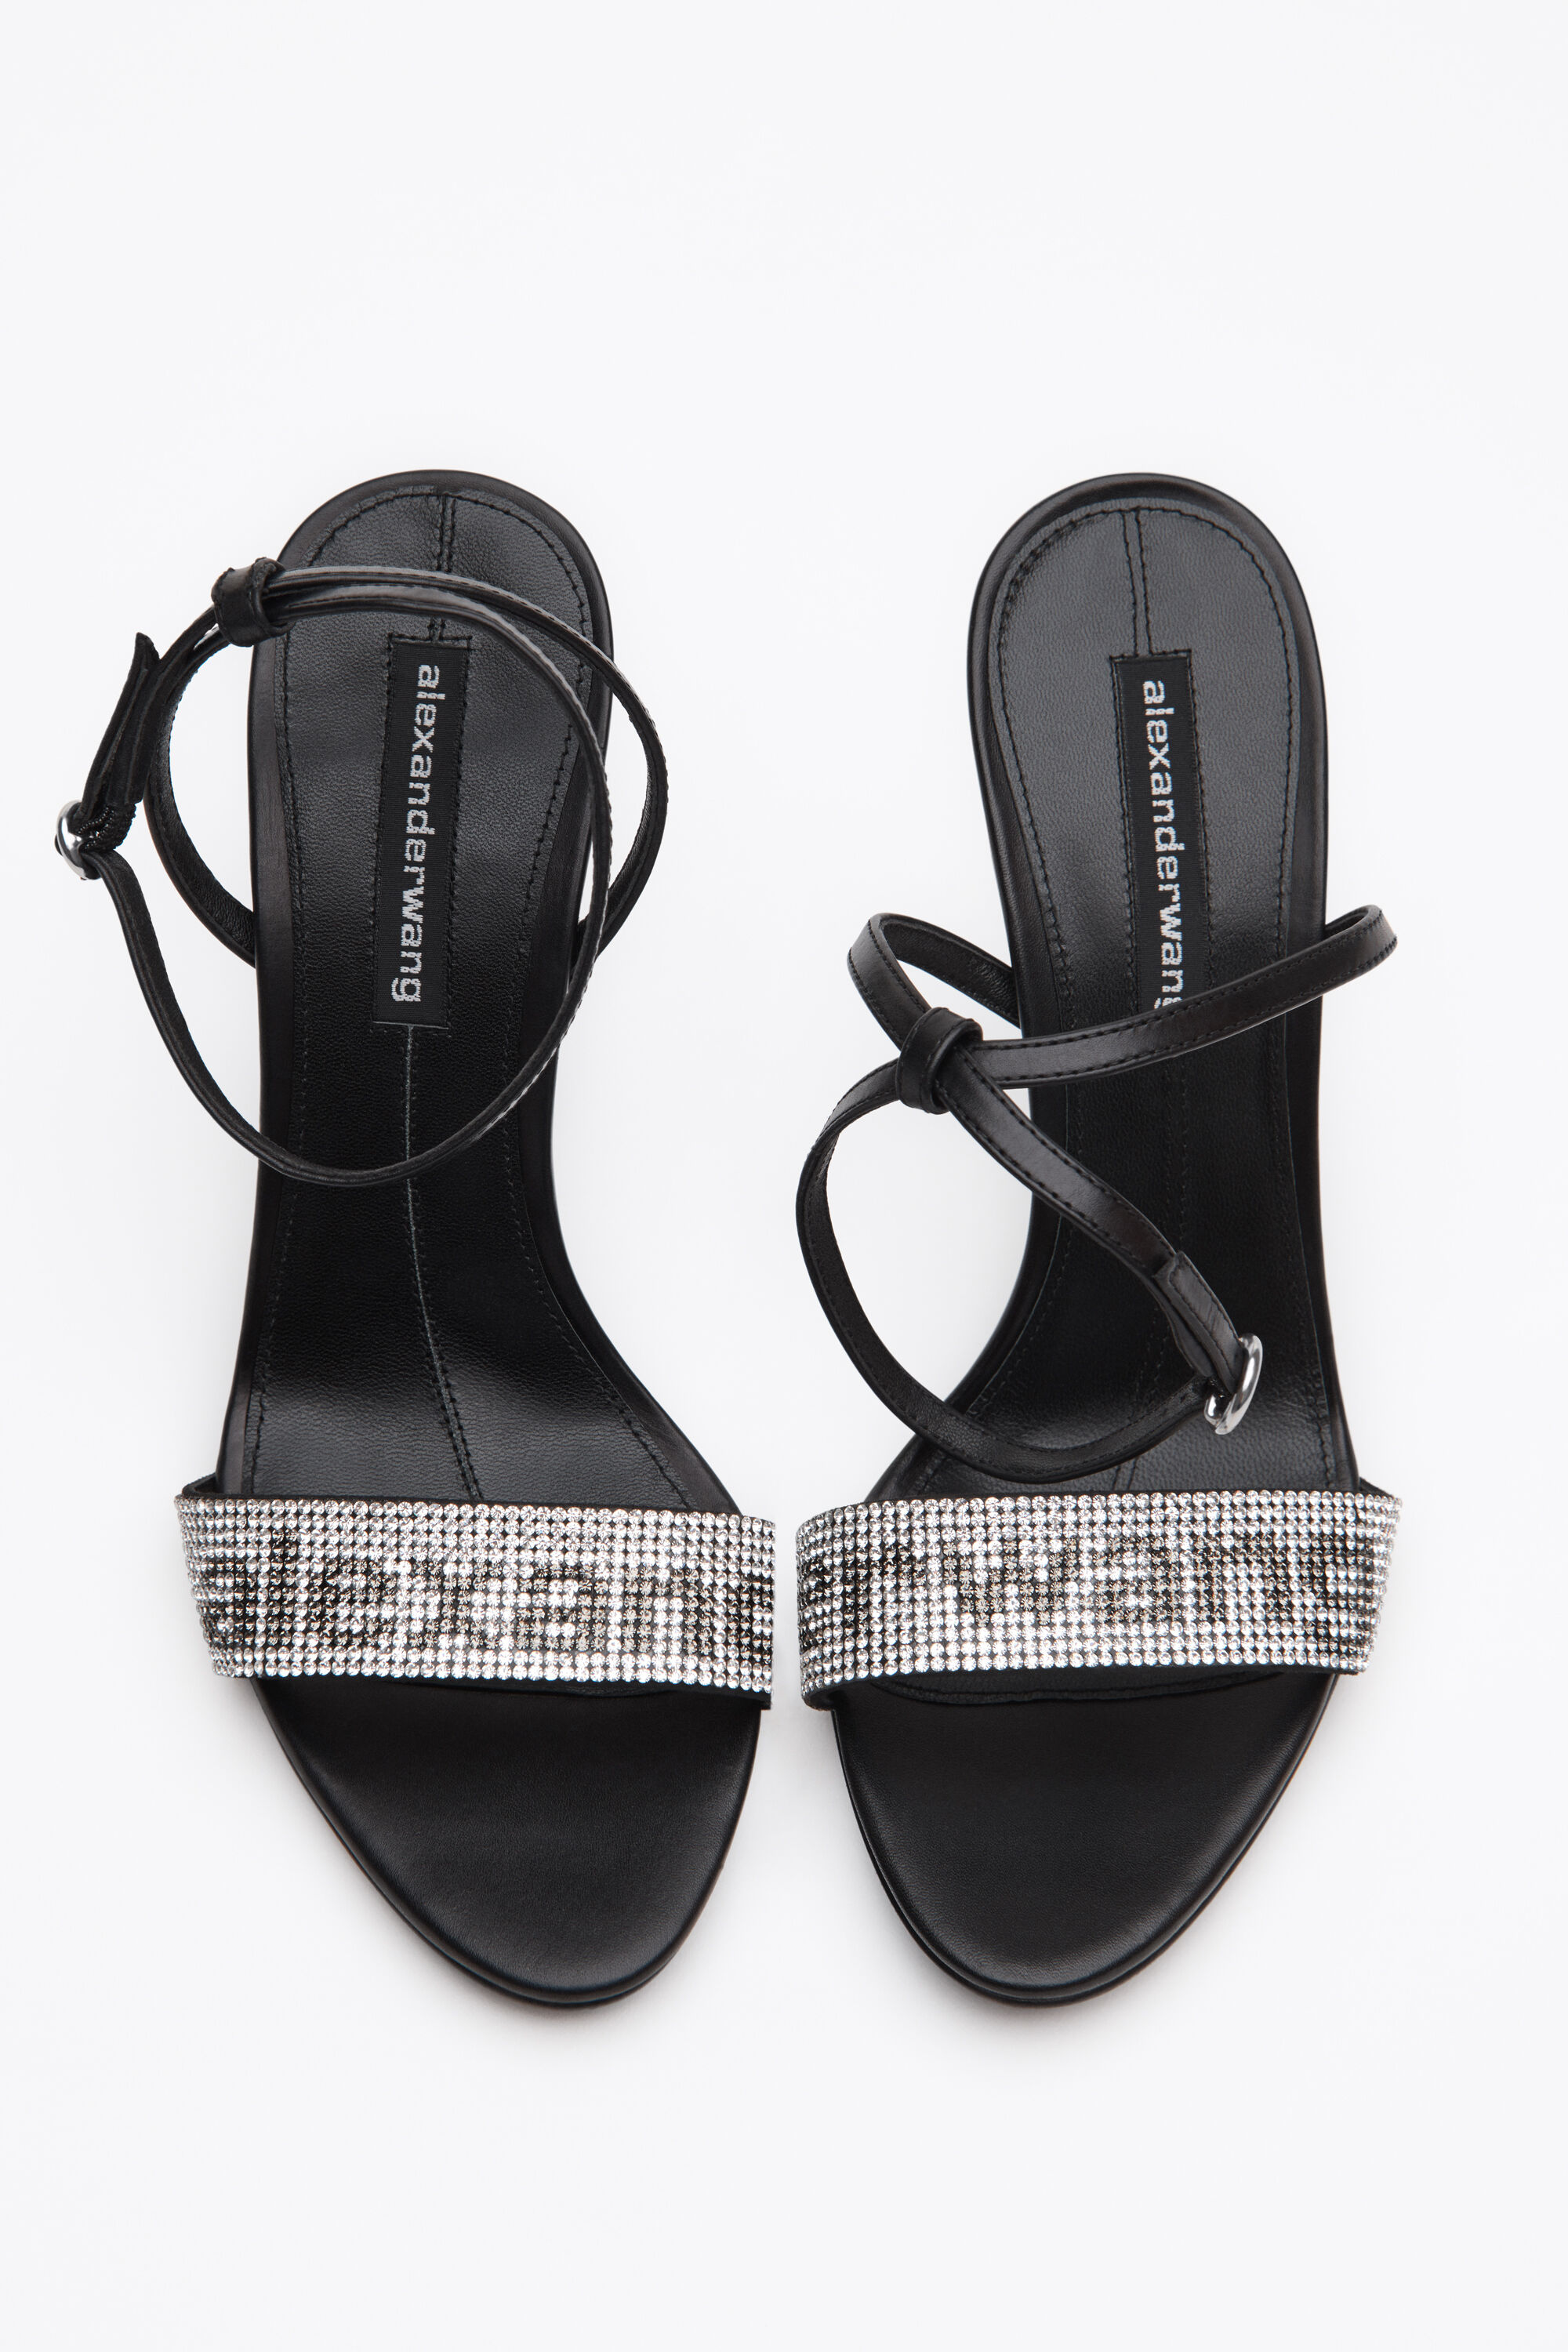 alexander wang shoes sale